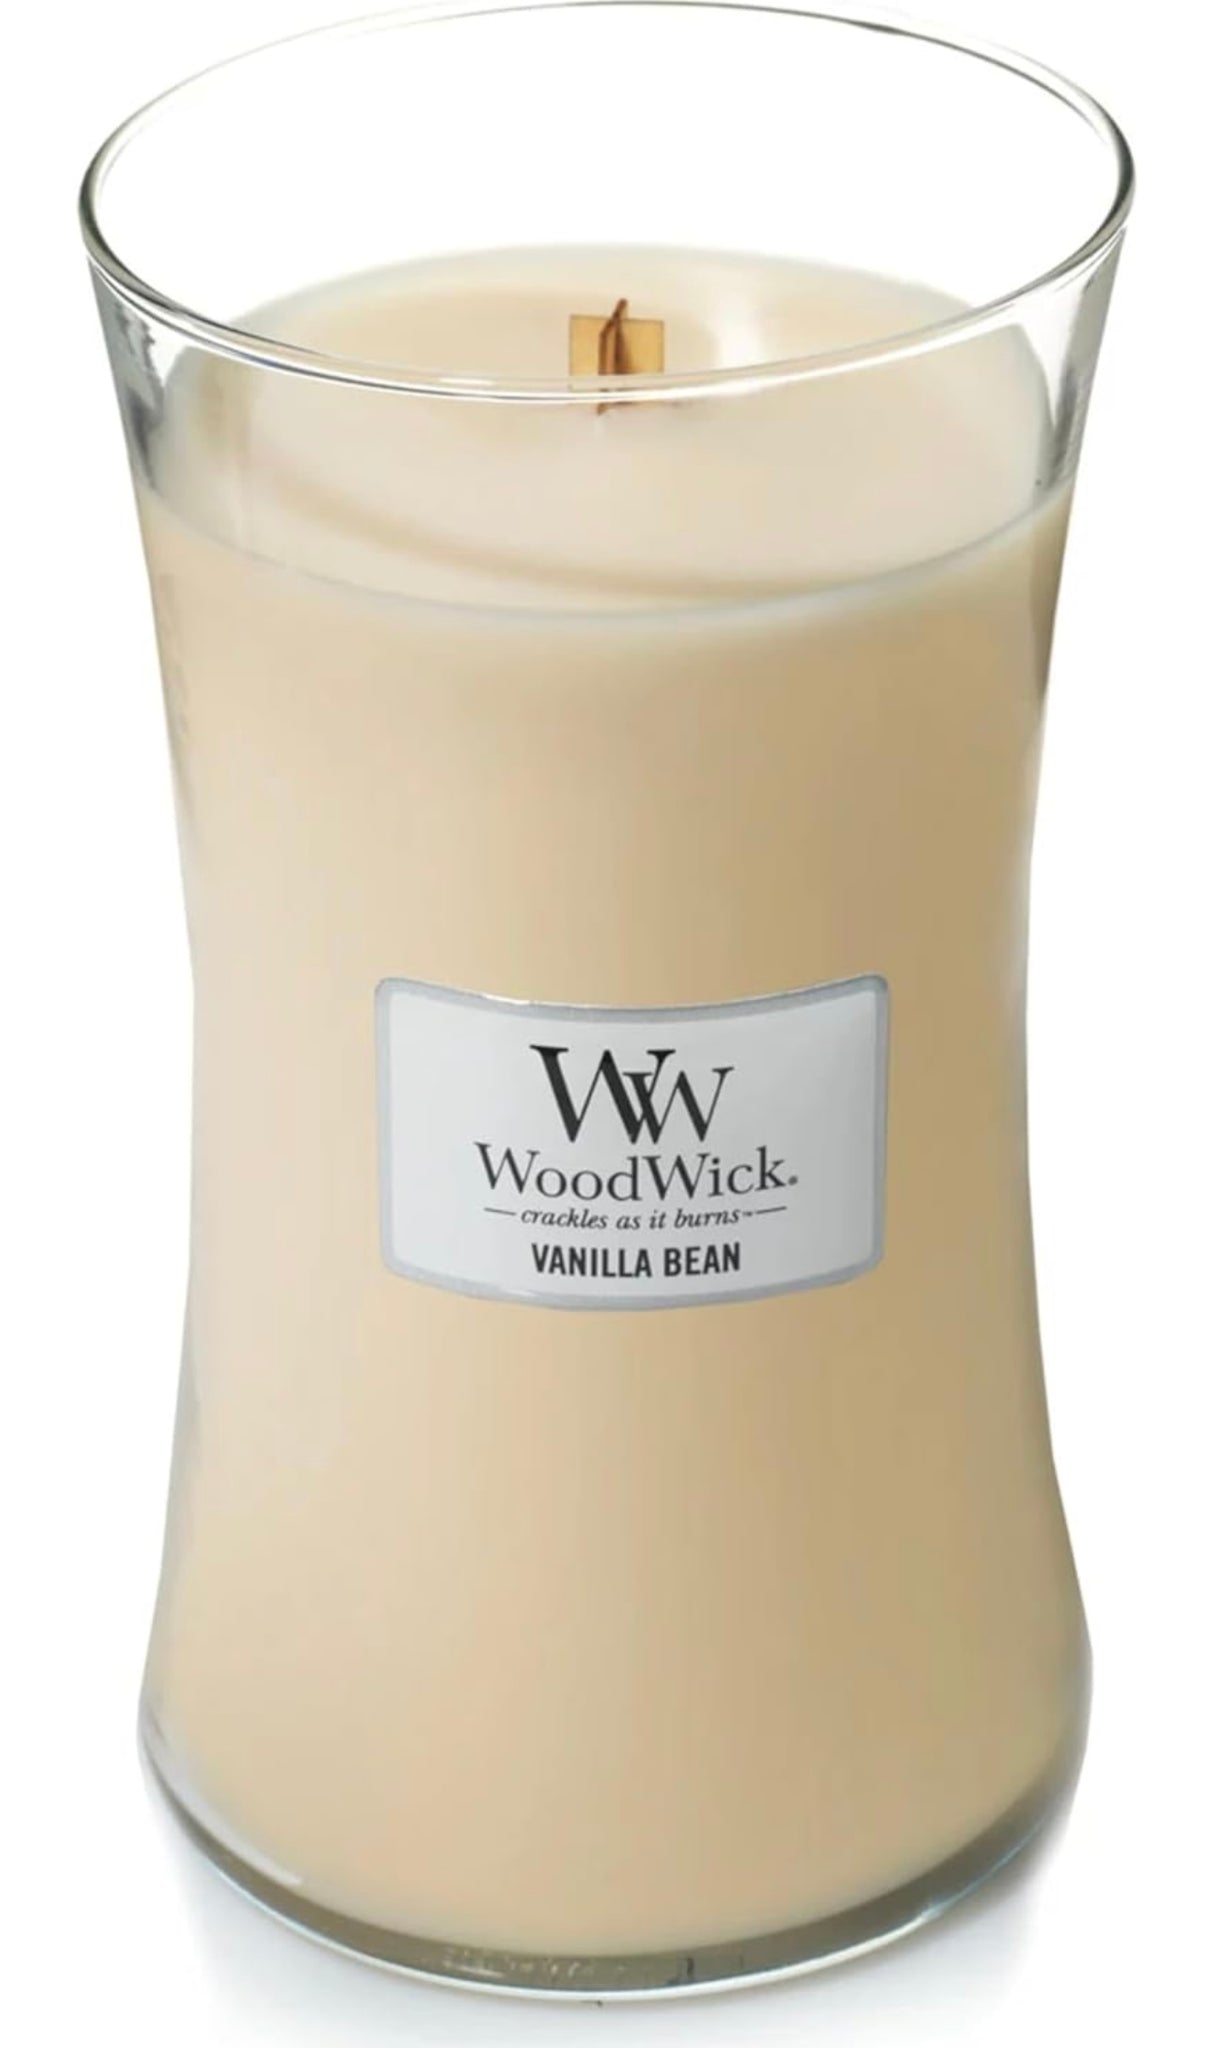 Woodwick Vanilla Bean Large Hourglass Candle